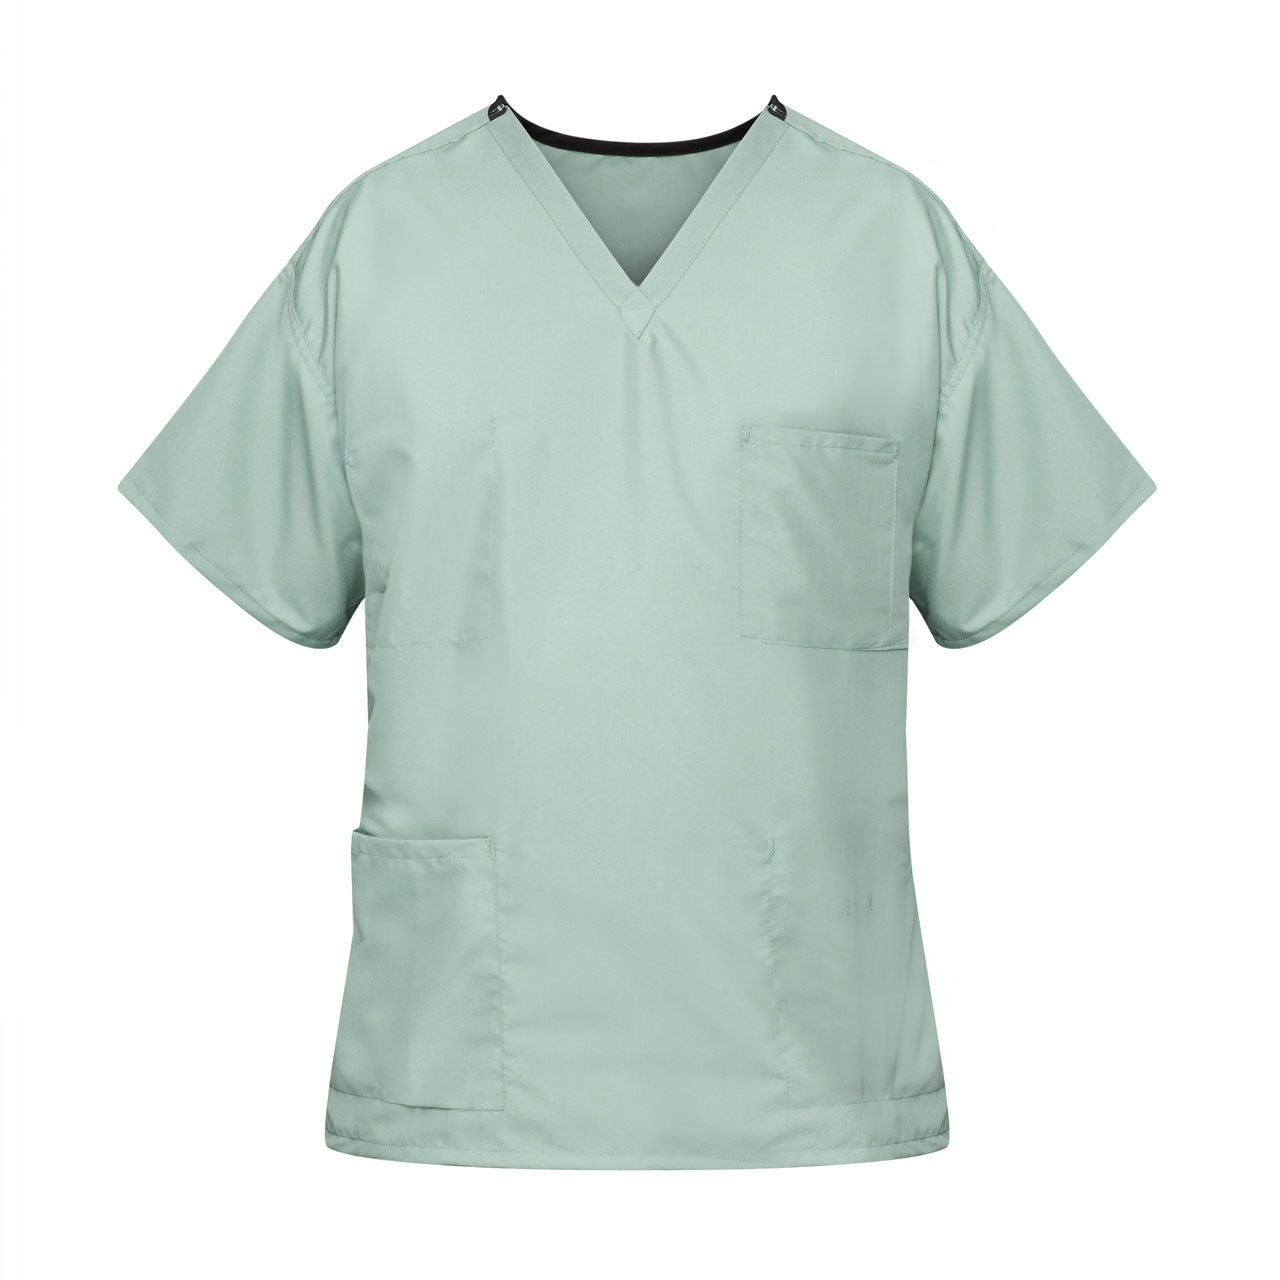 Do the misty green scrubs have inside pockets?